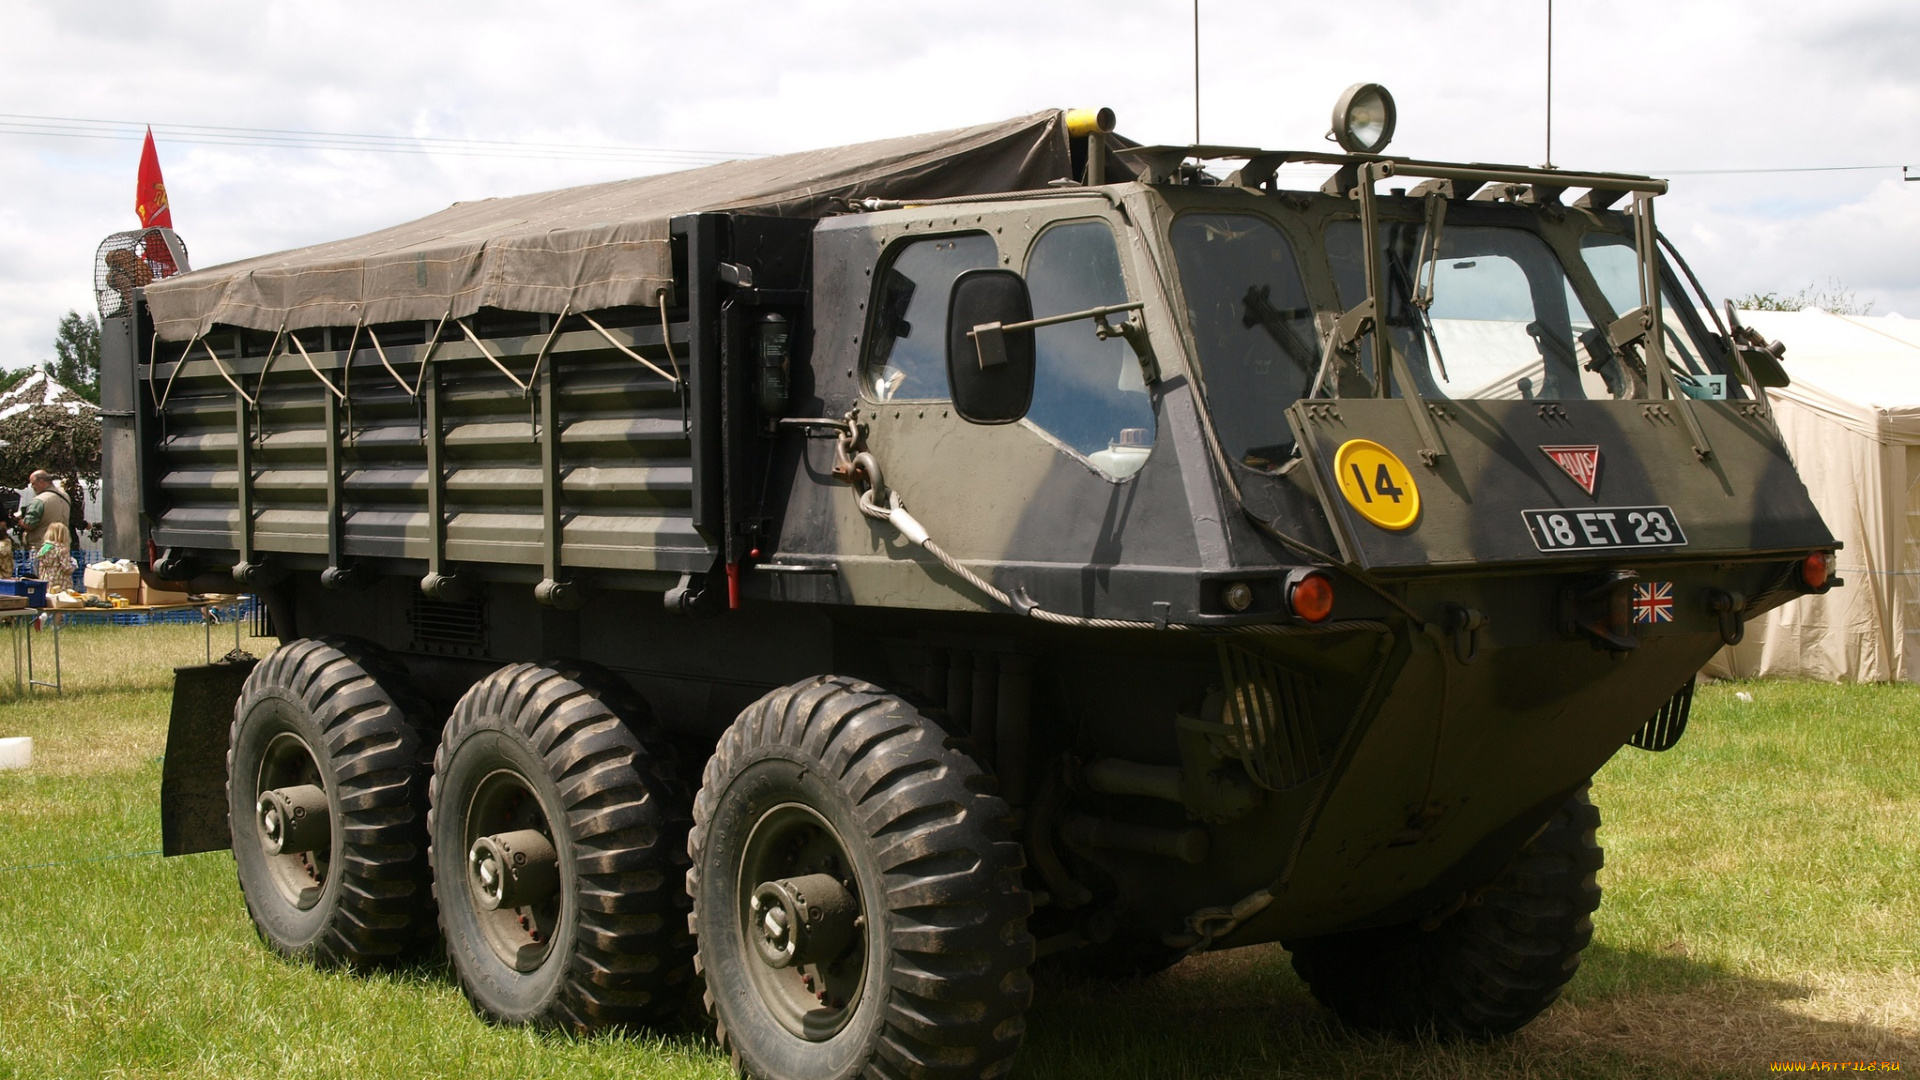 stalwart, fv620, amphibious, military, truck, техника, военная, техника, армейский, грузовик